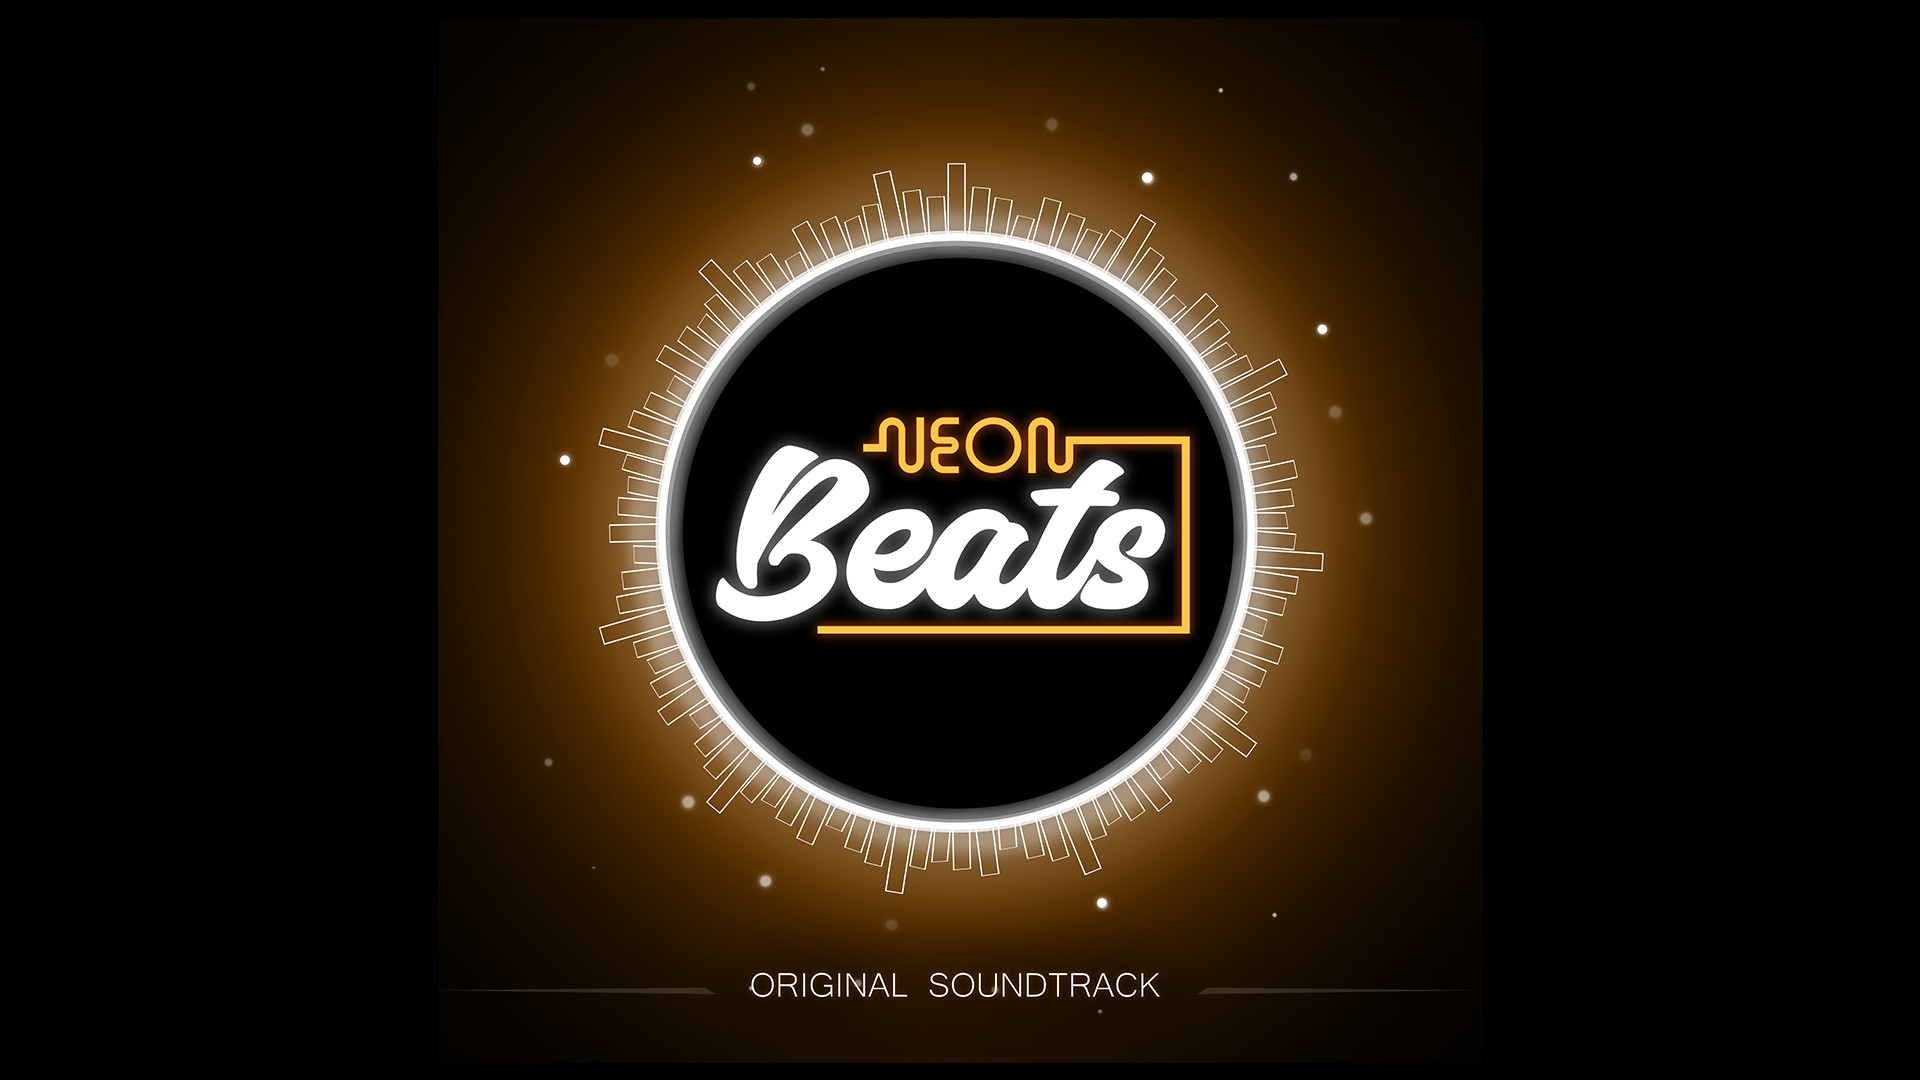 Neon Beats - Original Soundtrack Featured Screenshot #1